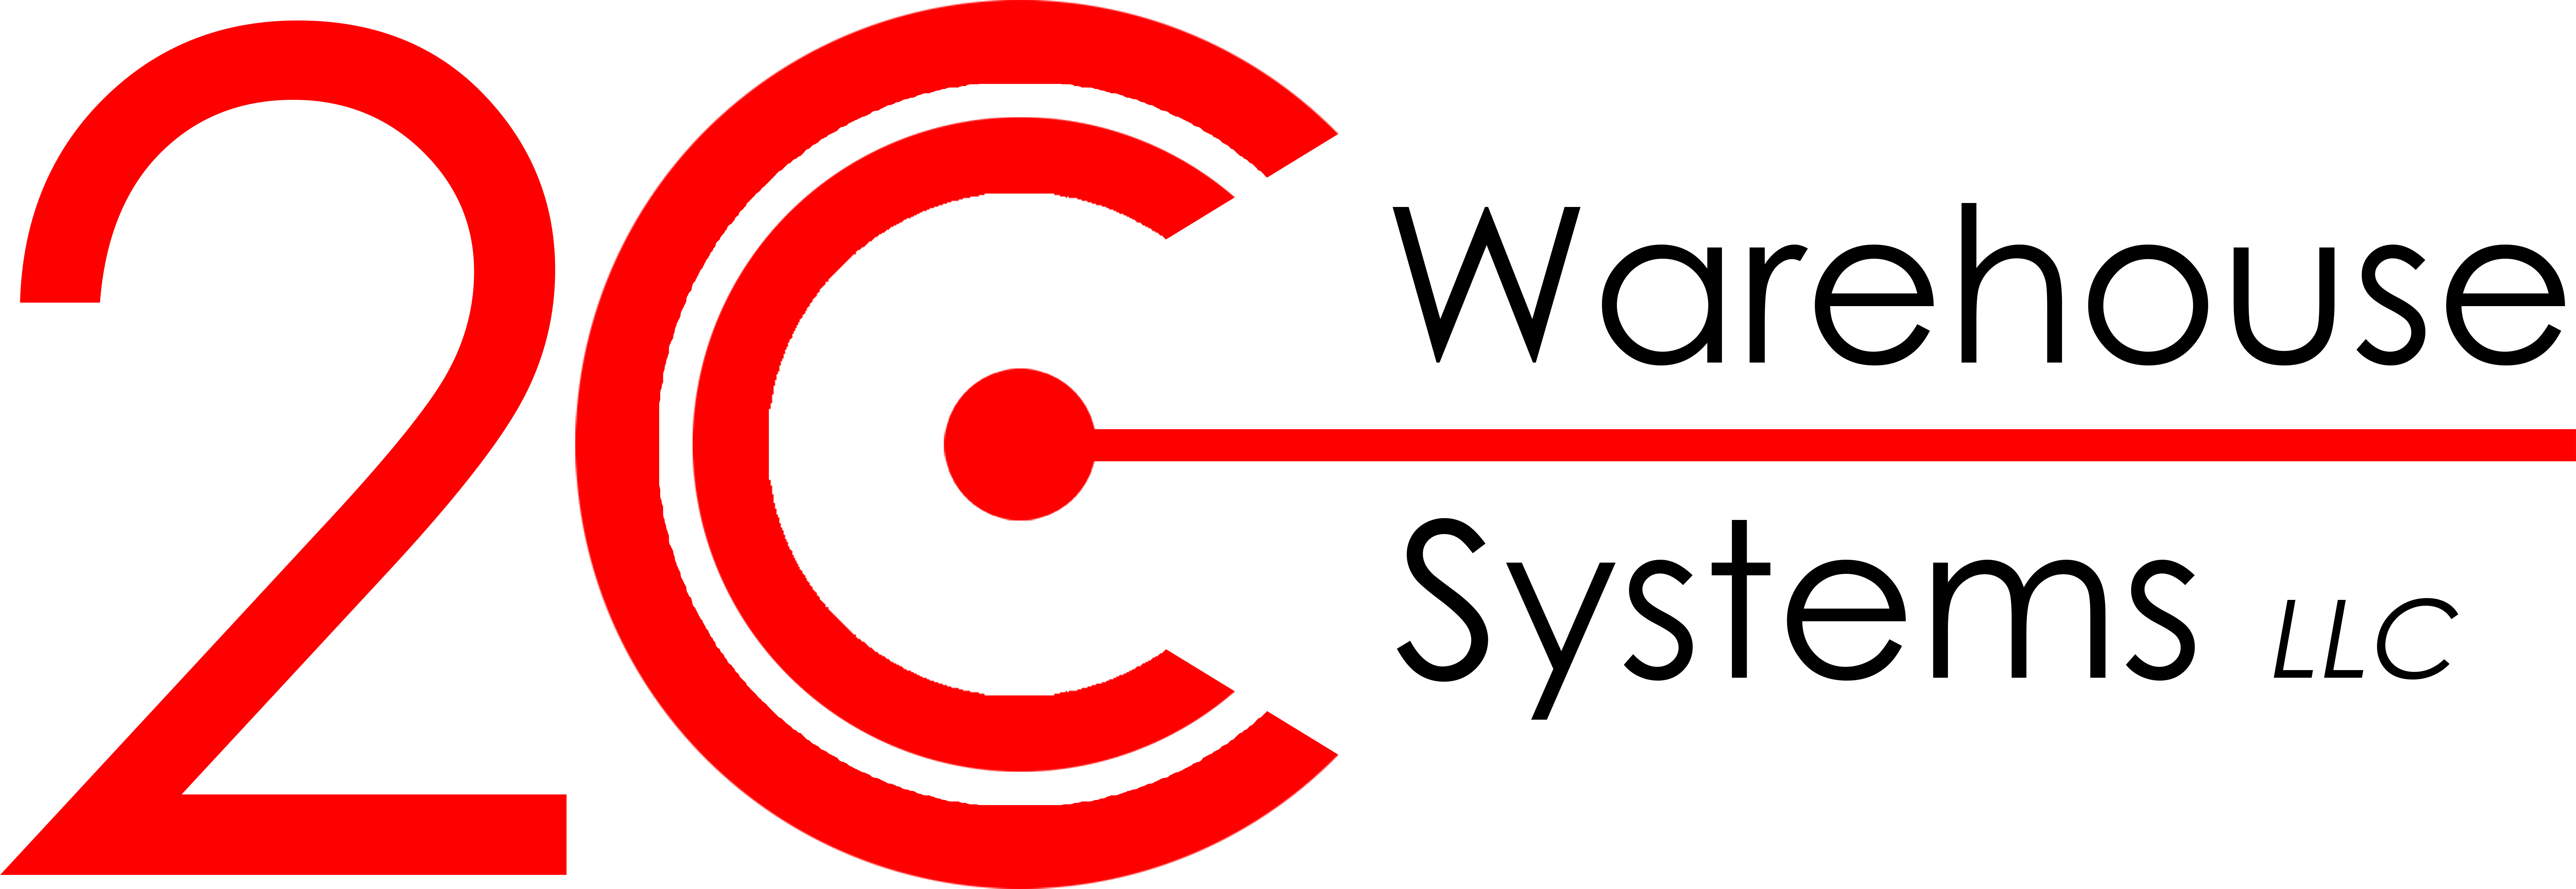 2C Warehouse Systems logo-1